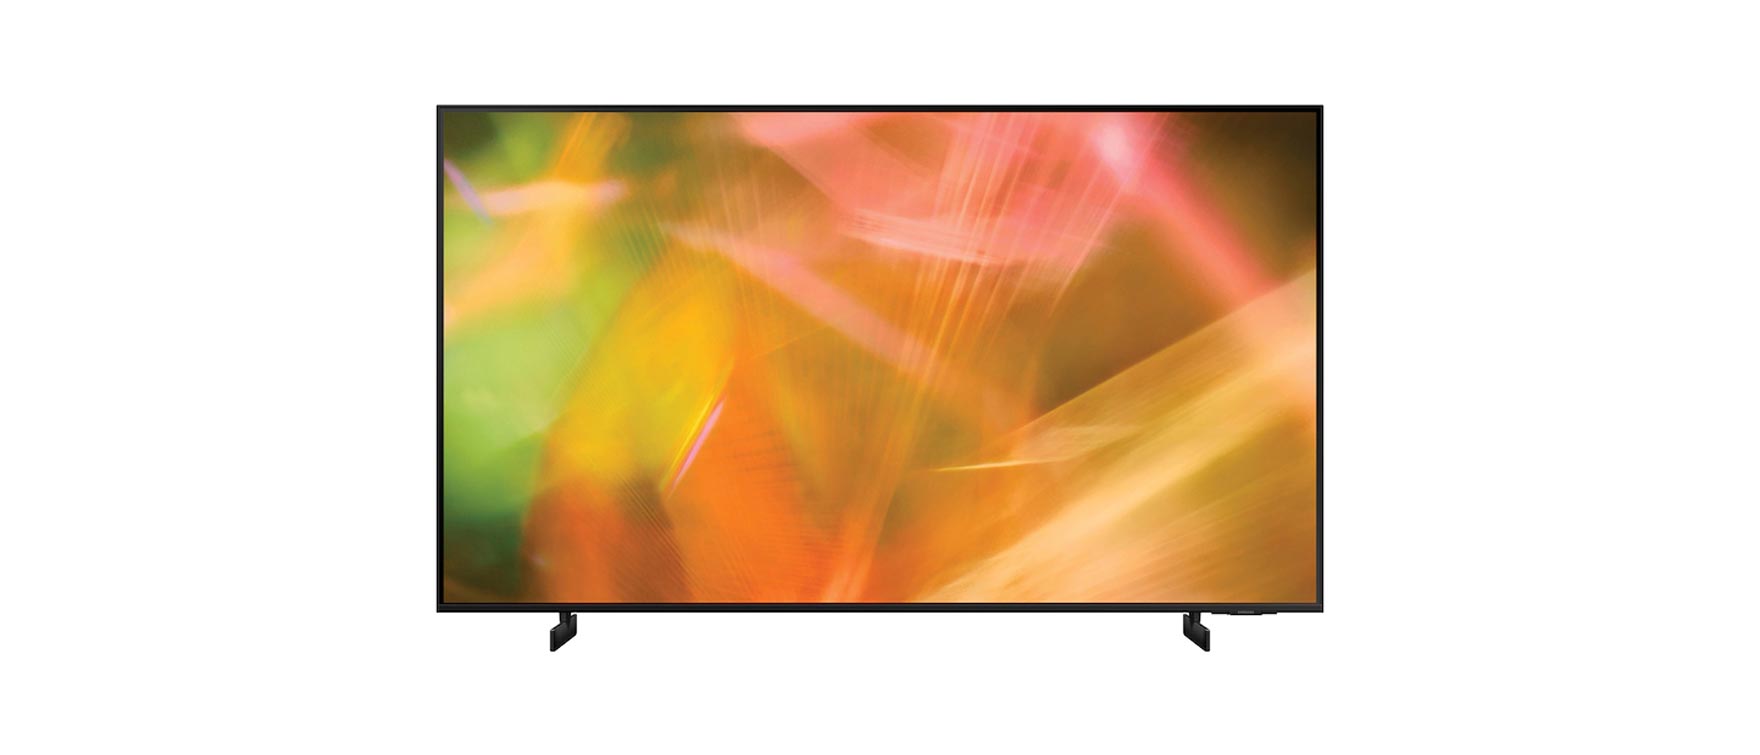 2. Super Smart TV: Samsung UN43AU8000FXZA Flat 43